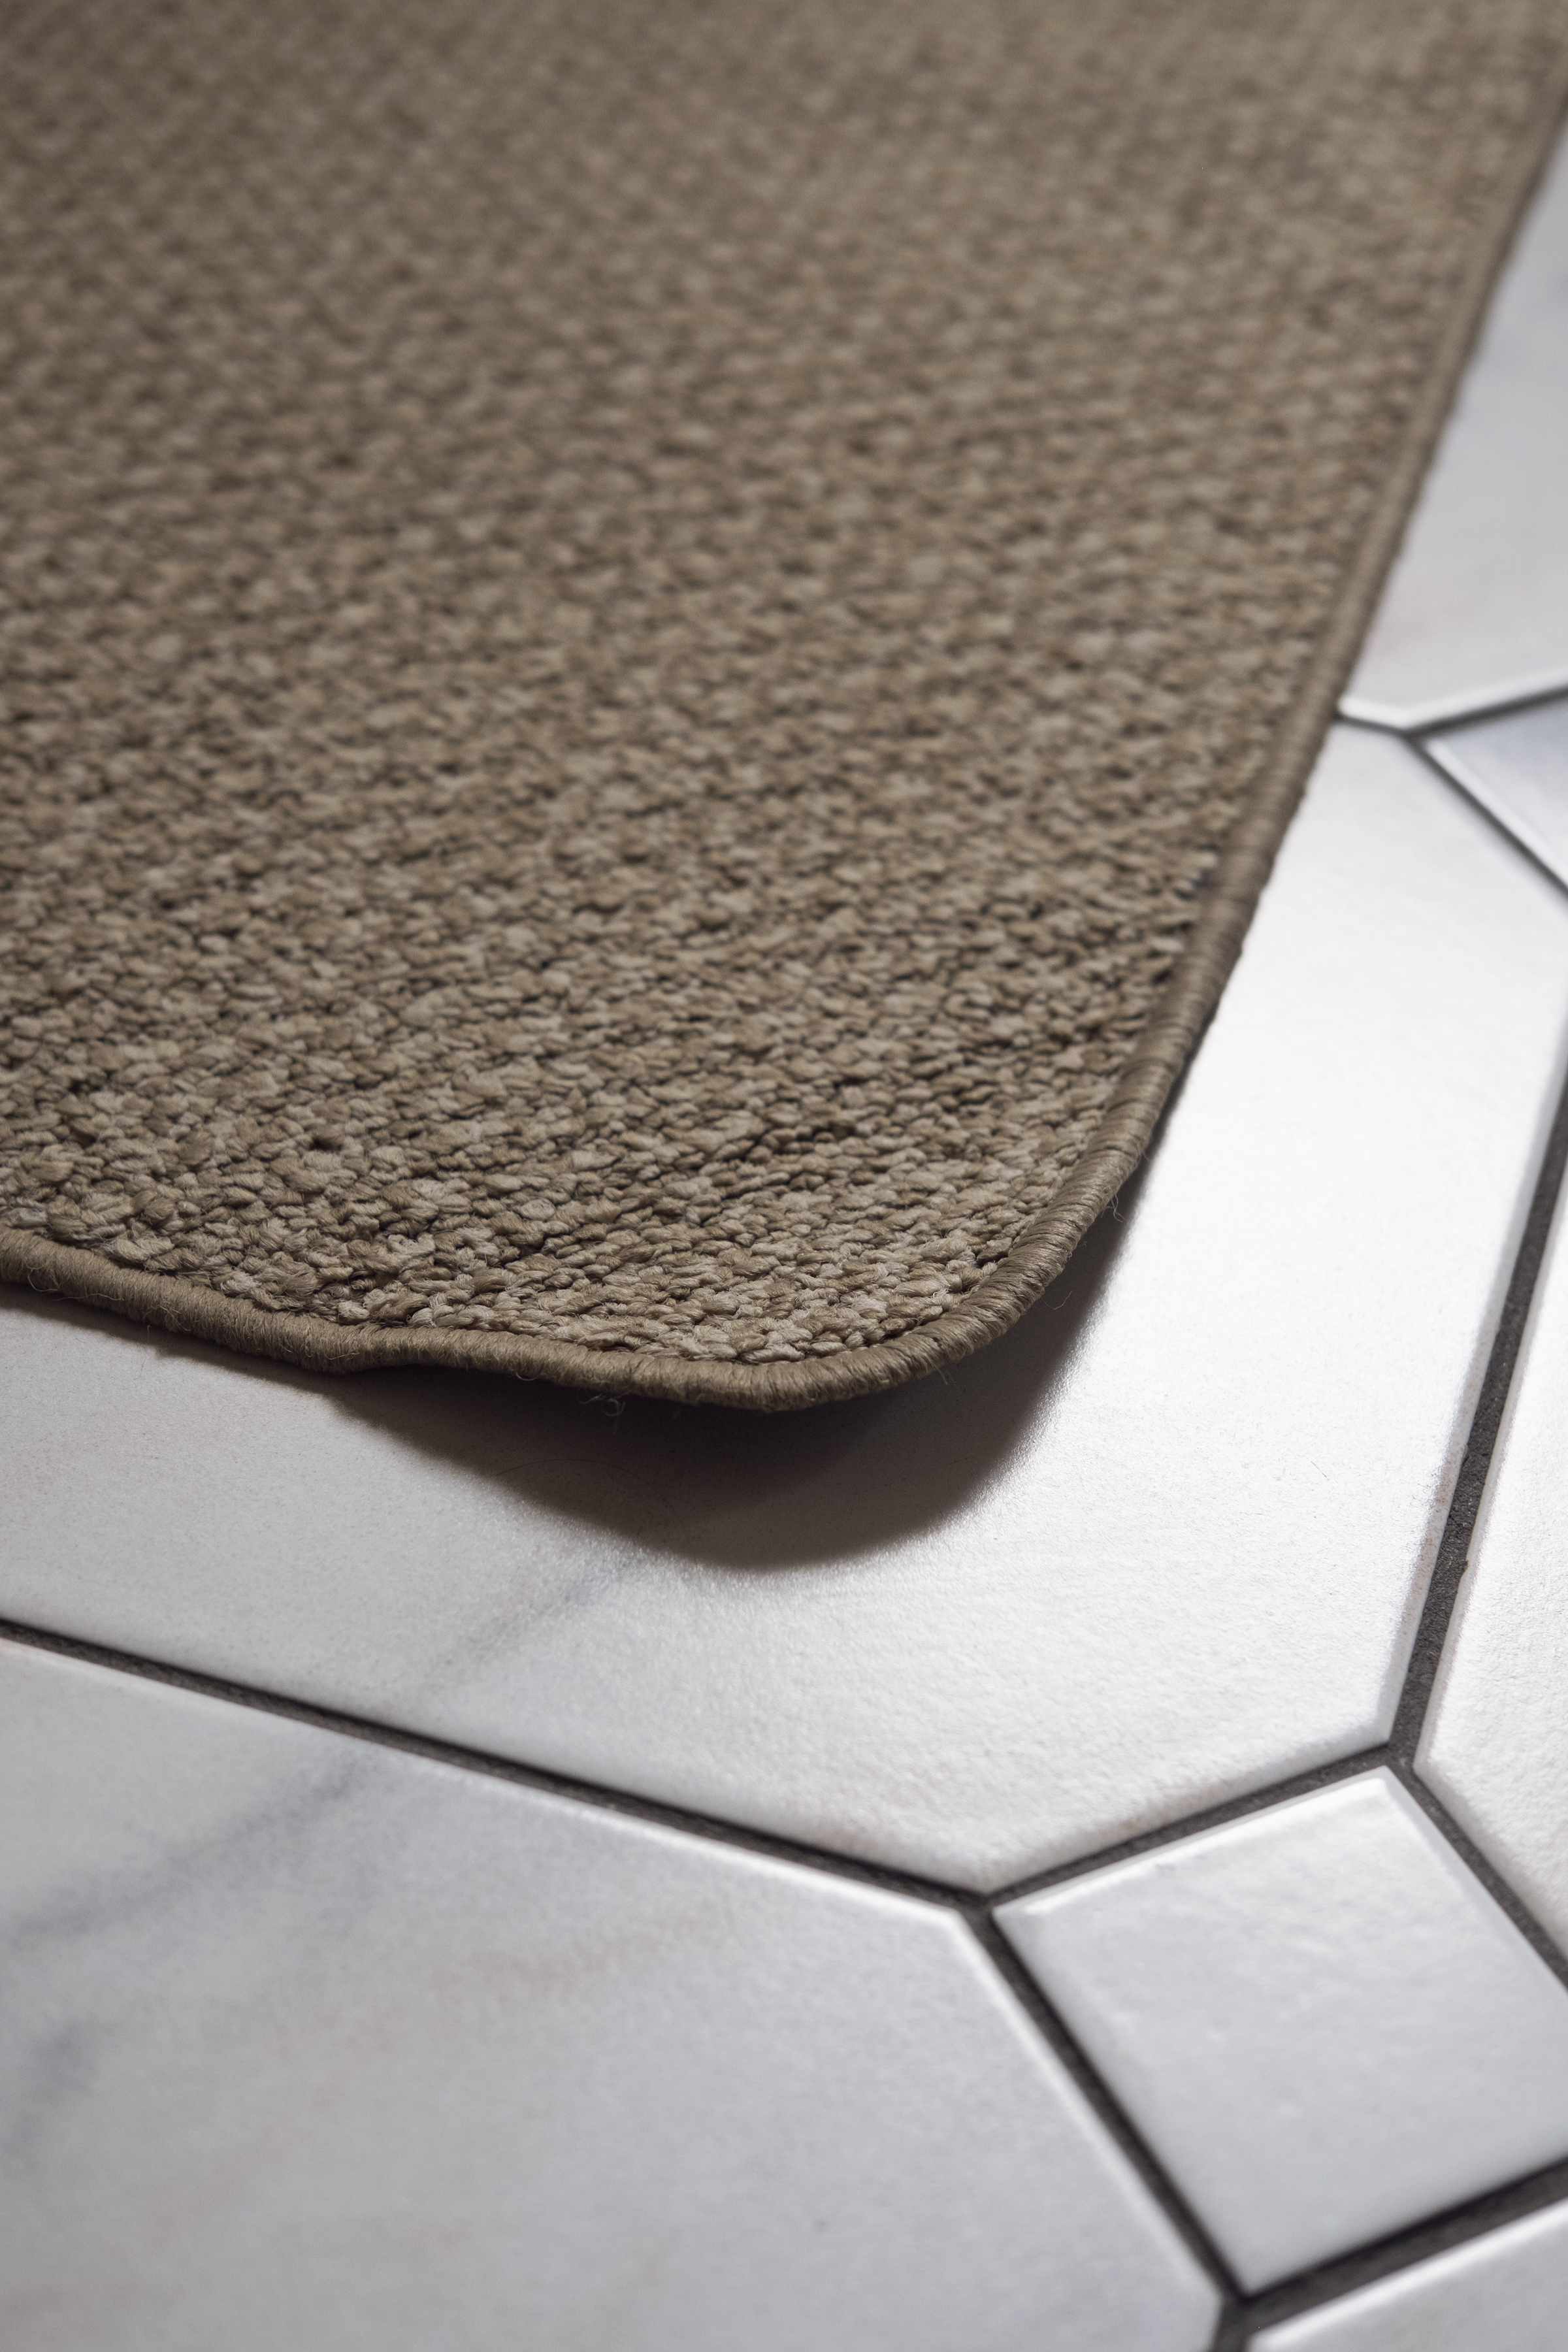 The edge of a carpet over a tile floor